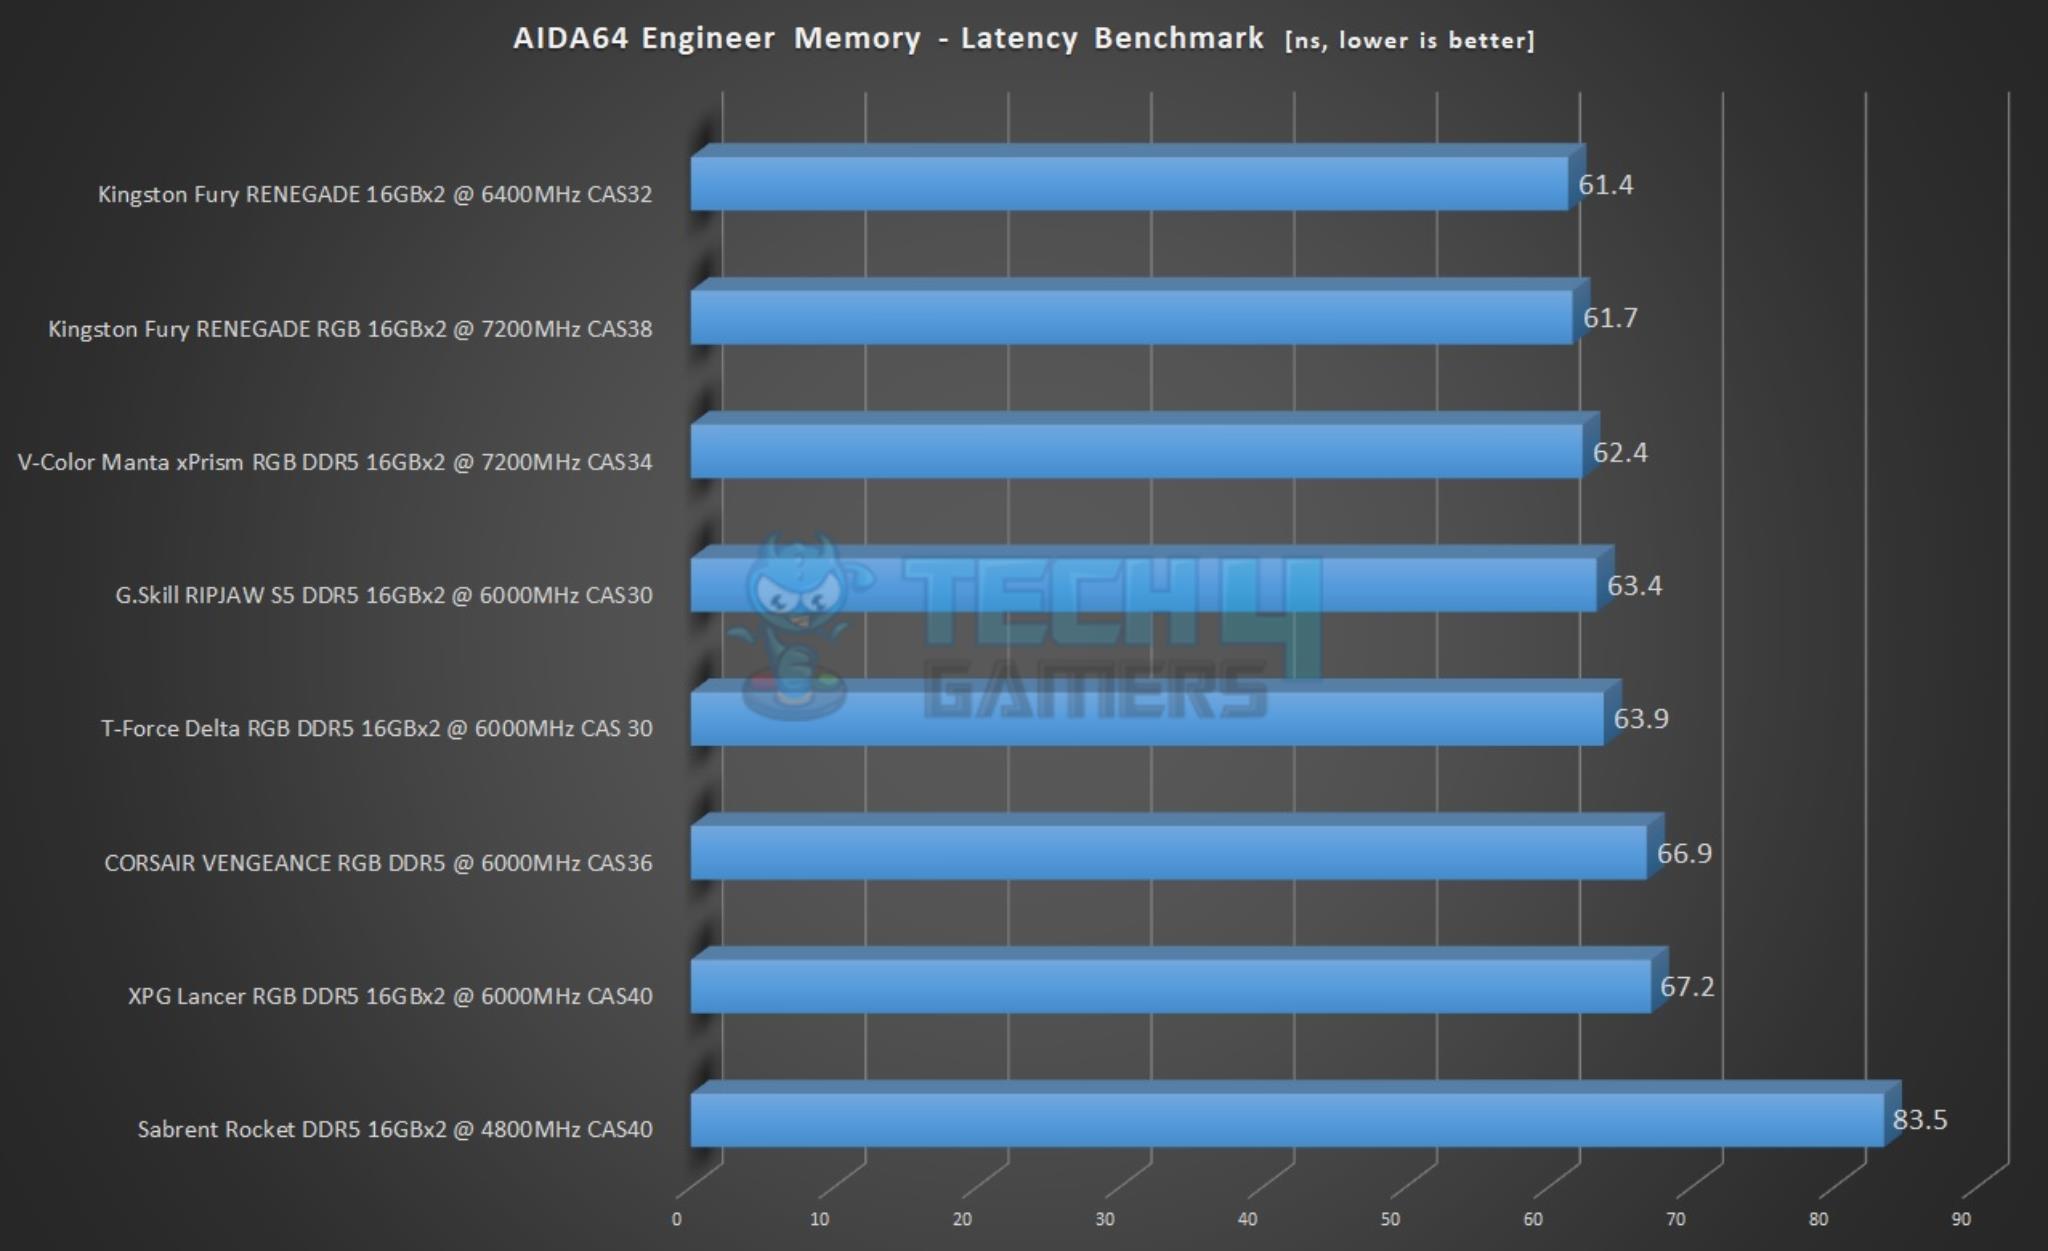 V-Color Manta xPrism RGB DDR5 32GB — AIDA64 Memory Latency Benchmark